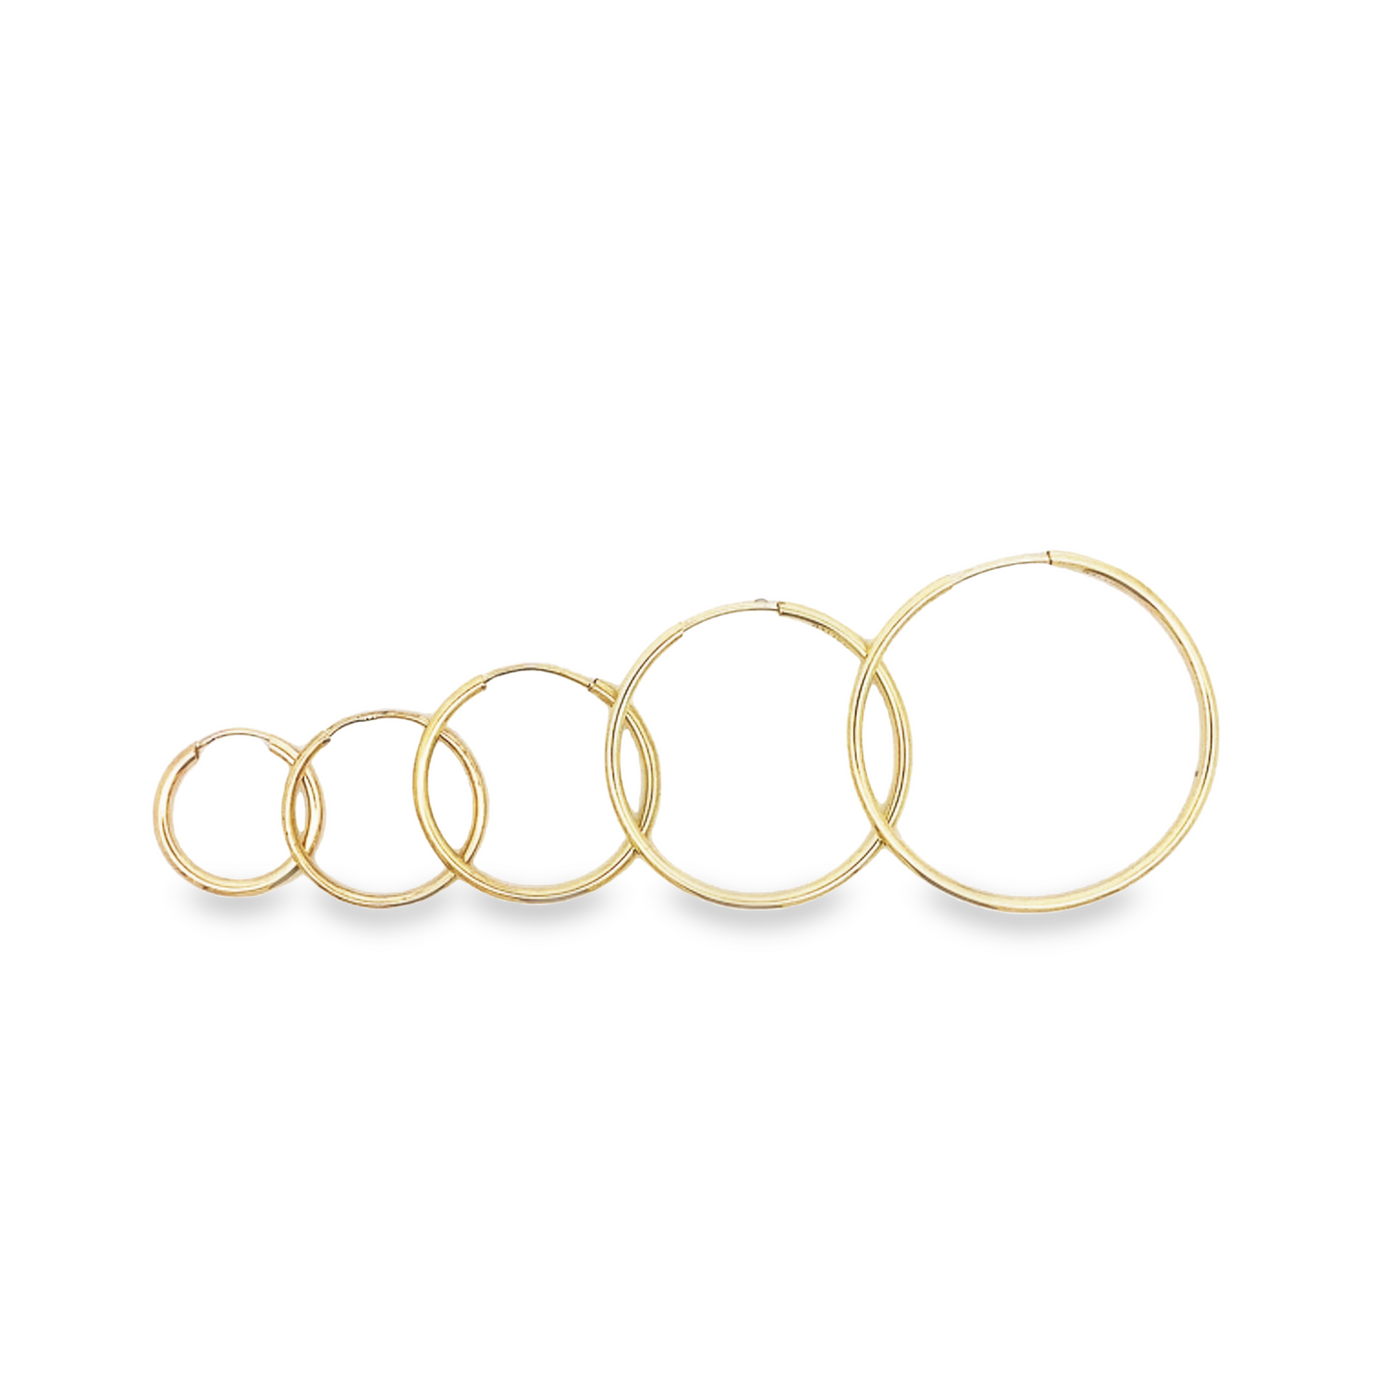 10 Karat Yellow Gold 1.5mm Width Endless Hoop Earrings